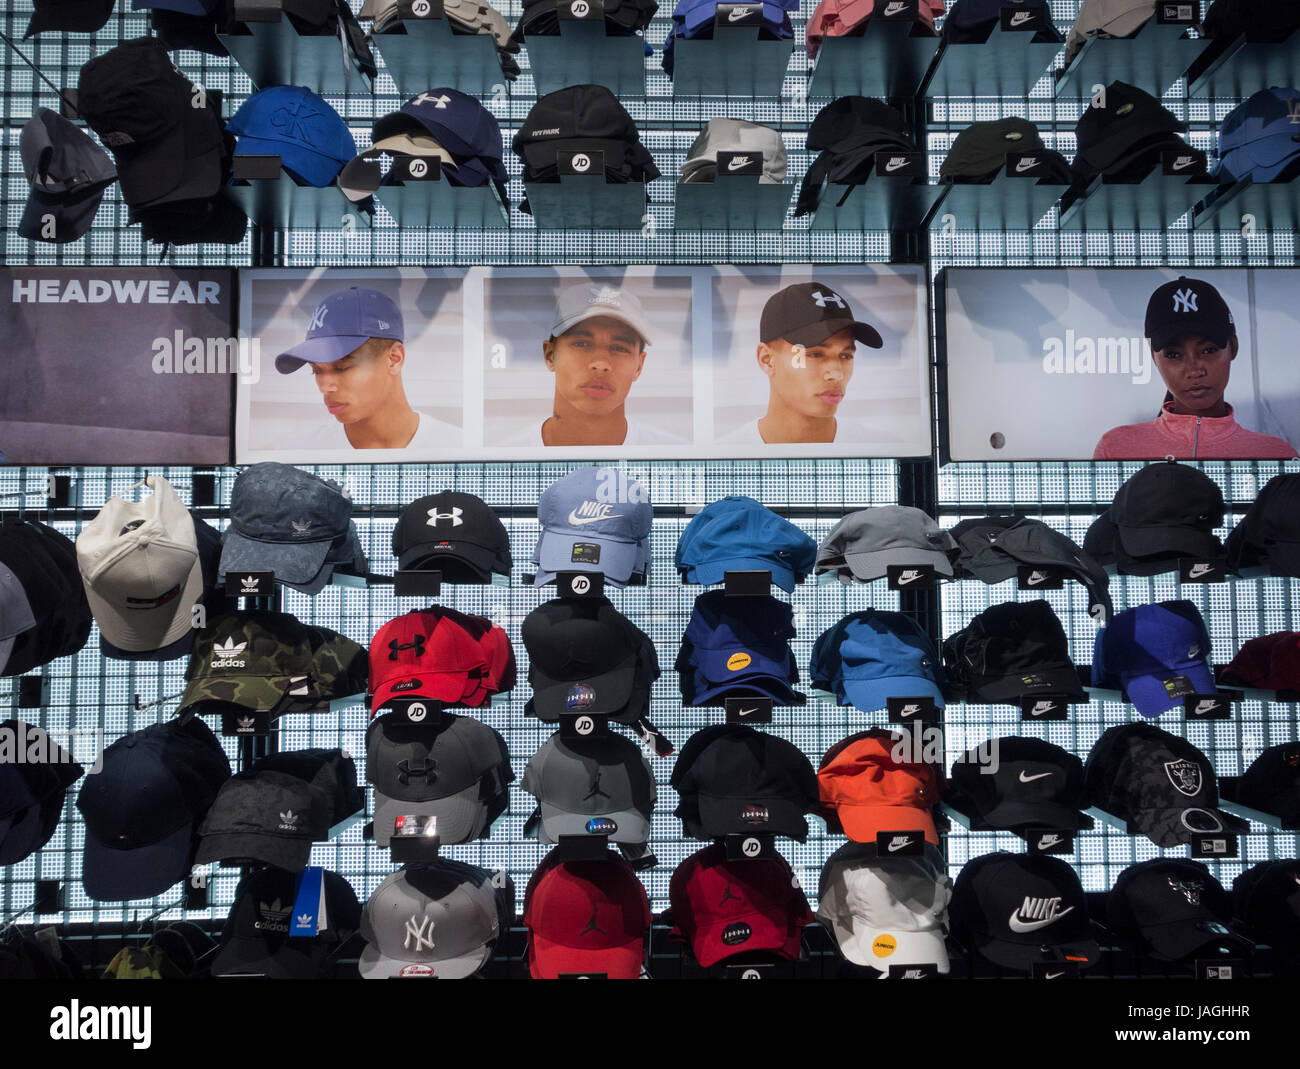 Baseball caps in JD Sports store. UK Stock Photo